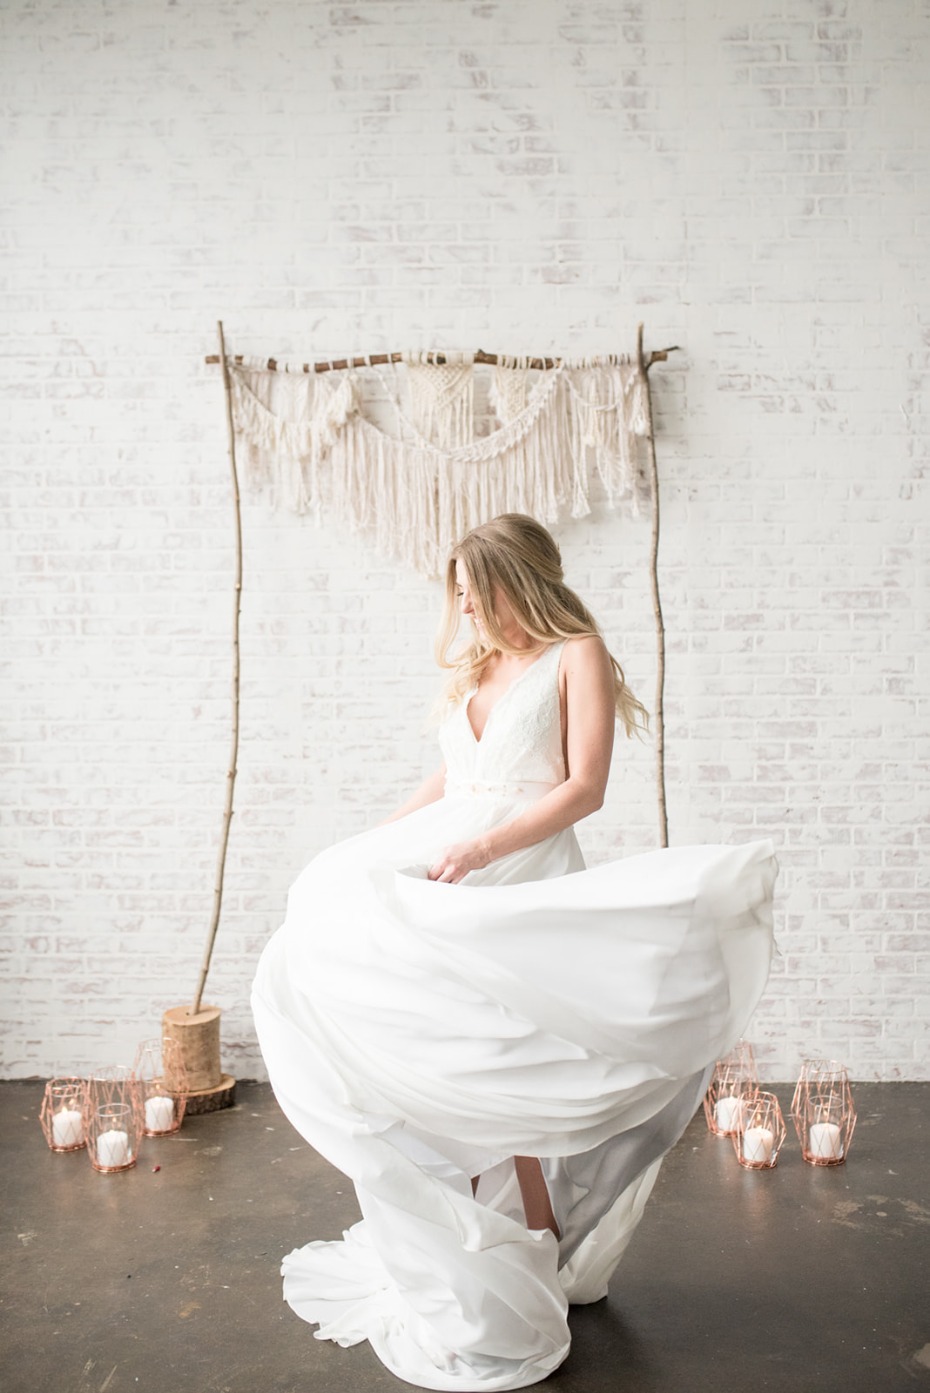 Twirl in your wedding dress